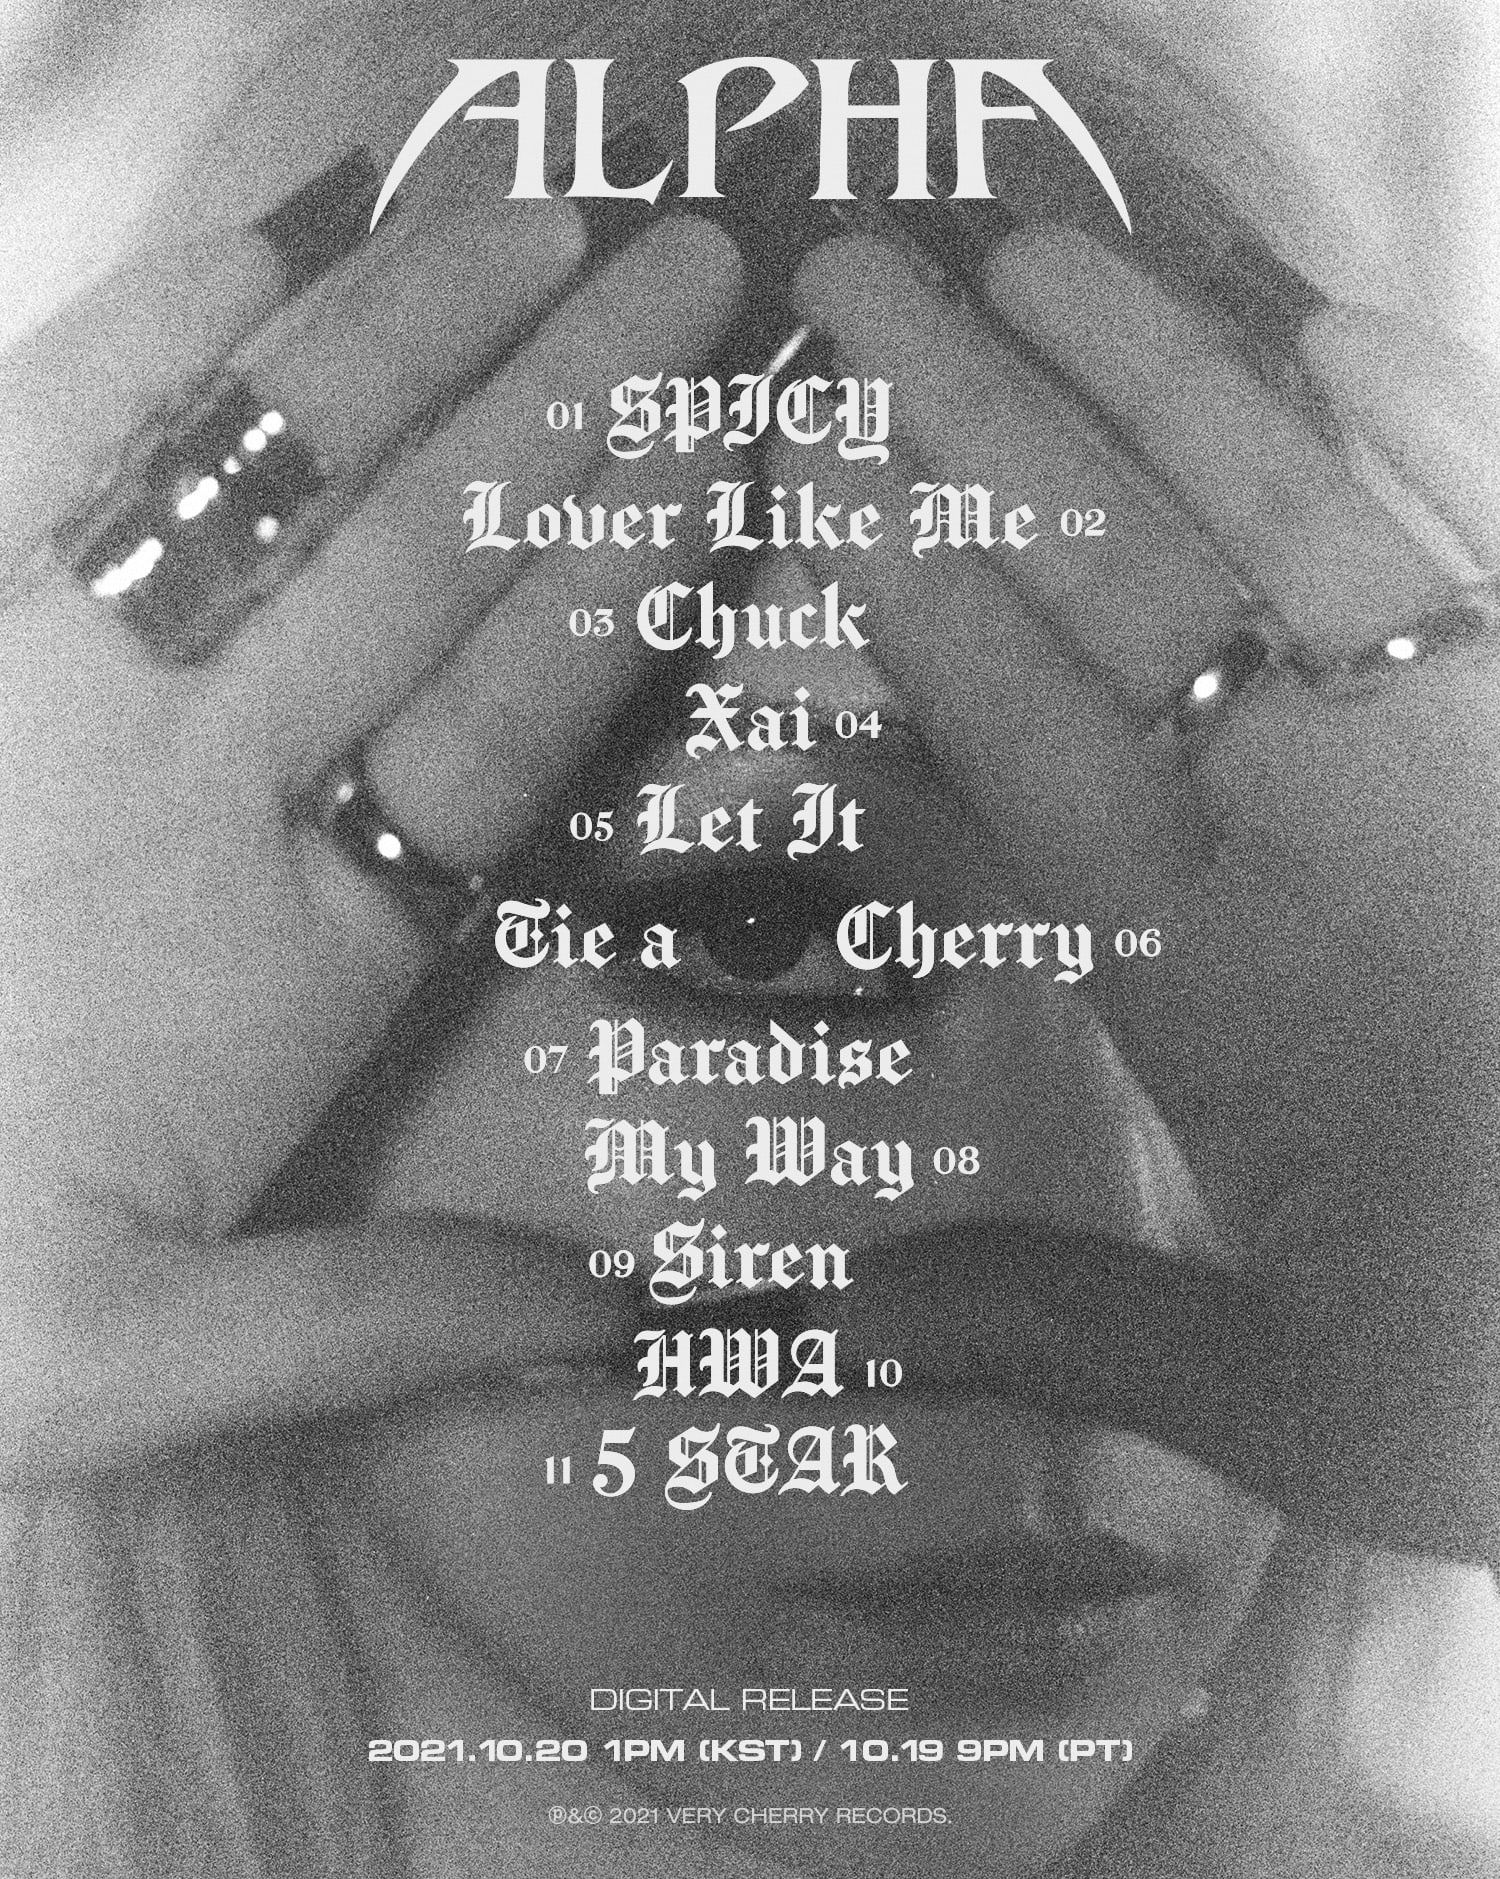 Tracklist album "Alpha" CL 2NE1